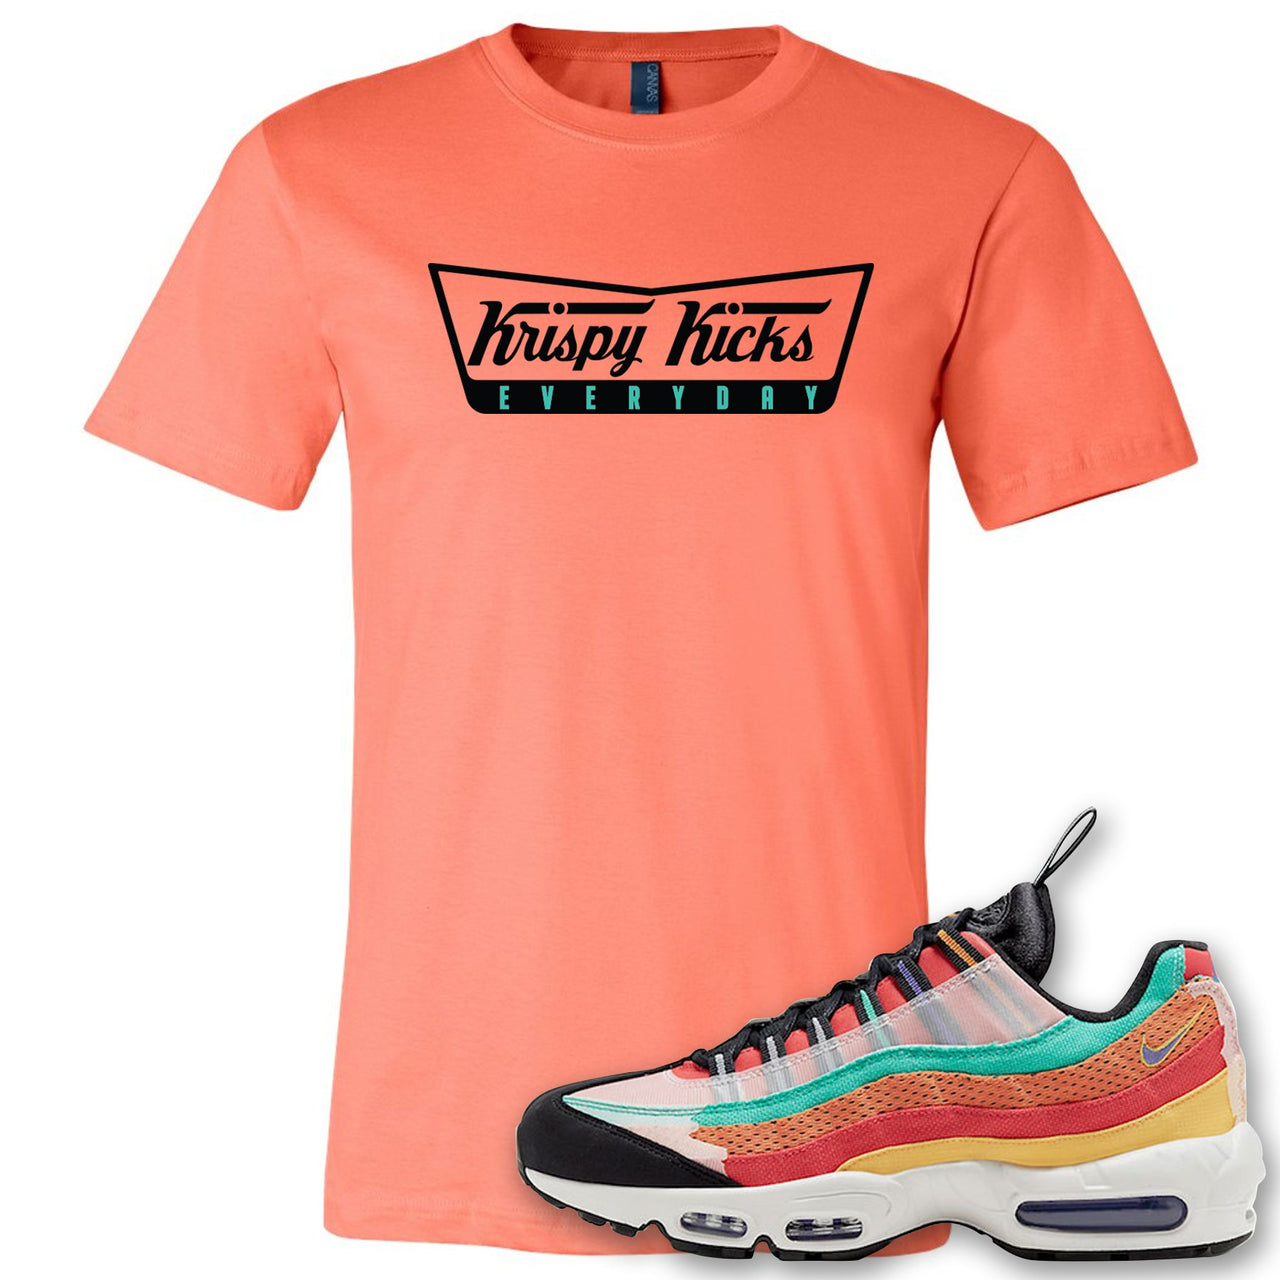 Air Max 95 Black History Month Sneaker Coral Silk T Shirt | Tees to match Nike Air Max 95 Black History Month Shoes | Krispy Kicks